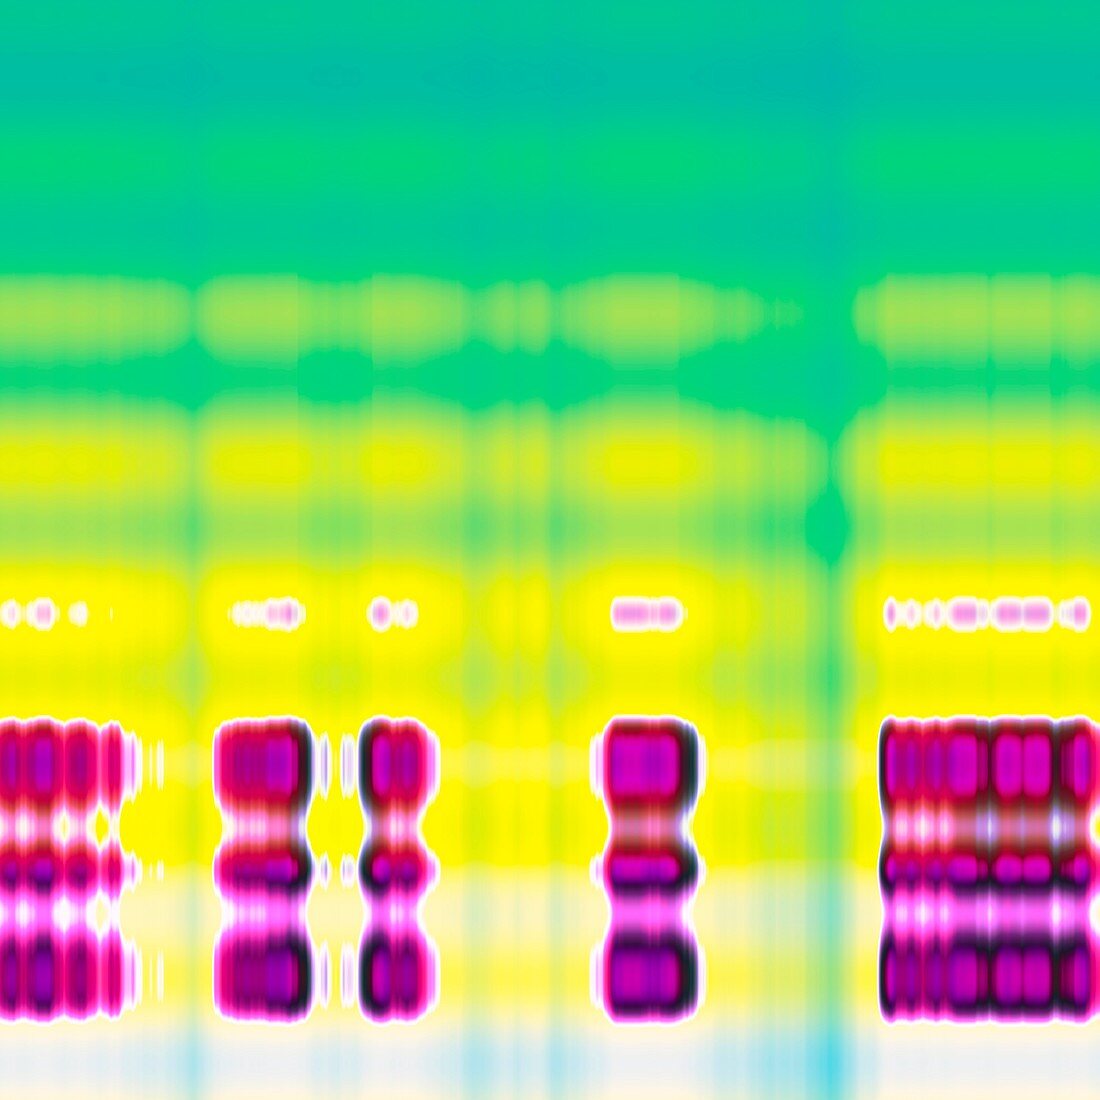 DNA sequence,artwork